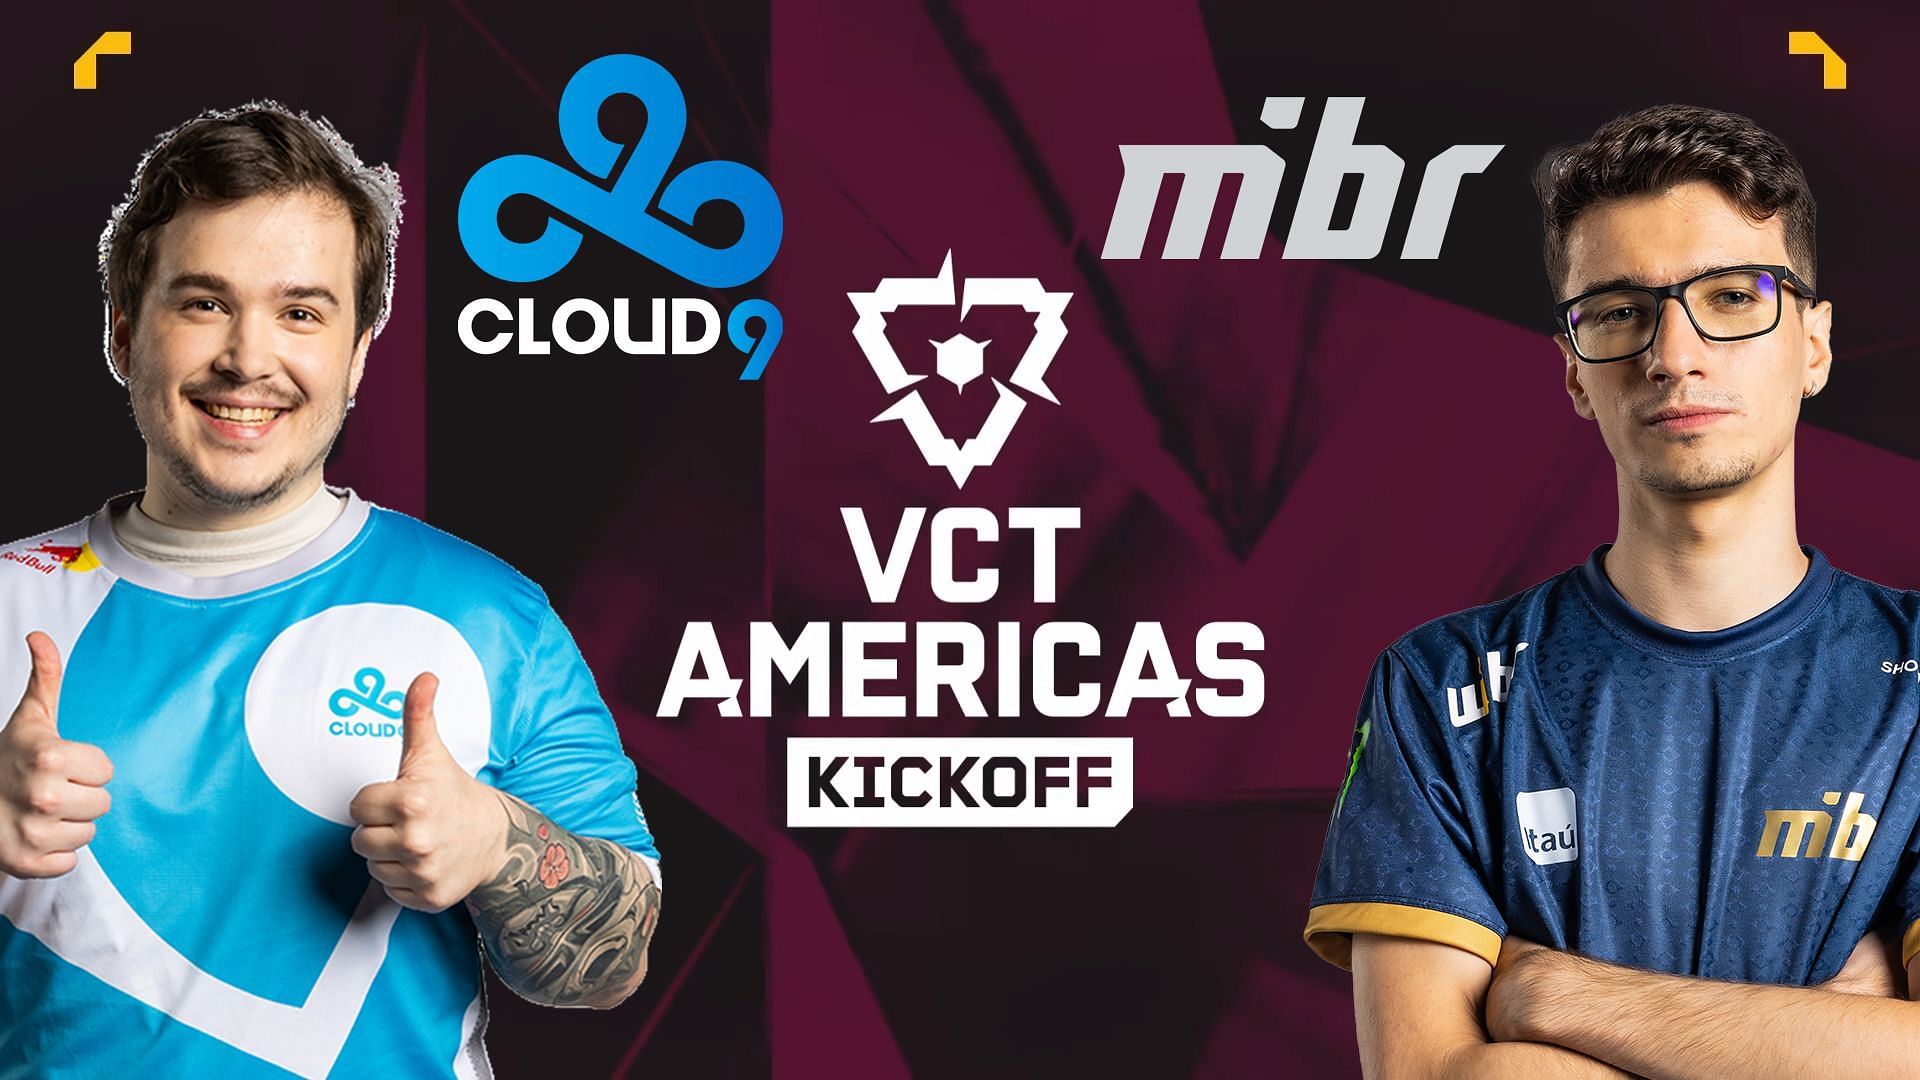 Cloud9 vs MIBR at VCT Americas Kickoff (Image via Riot Games, Cloud9 and MIBR)